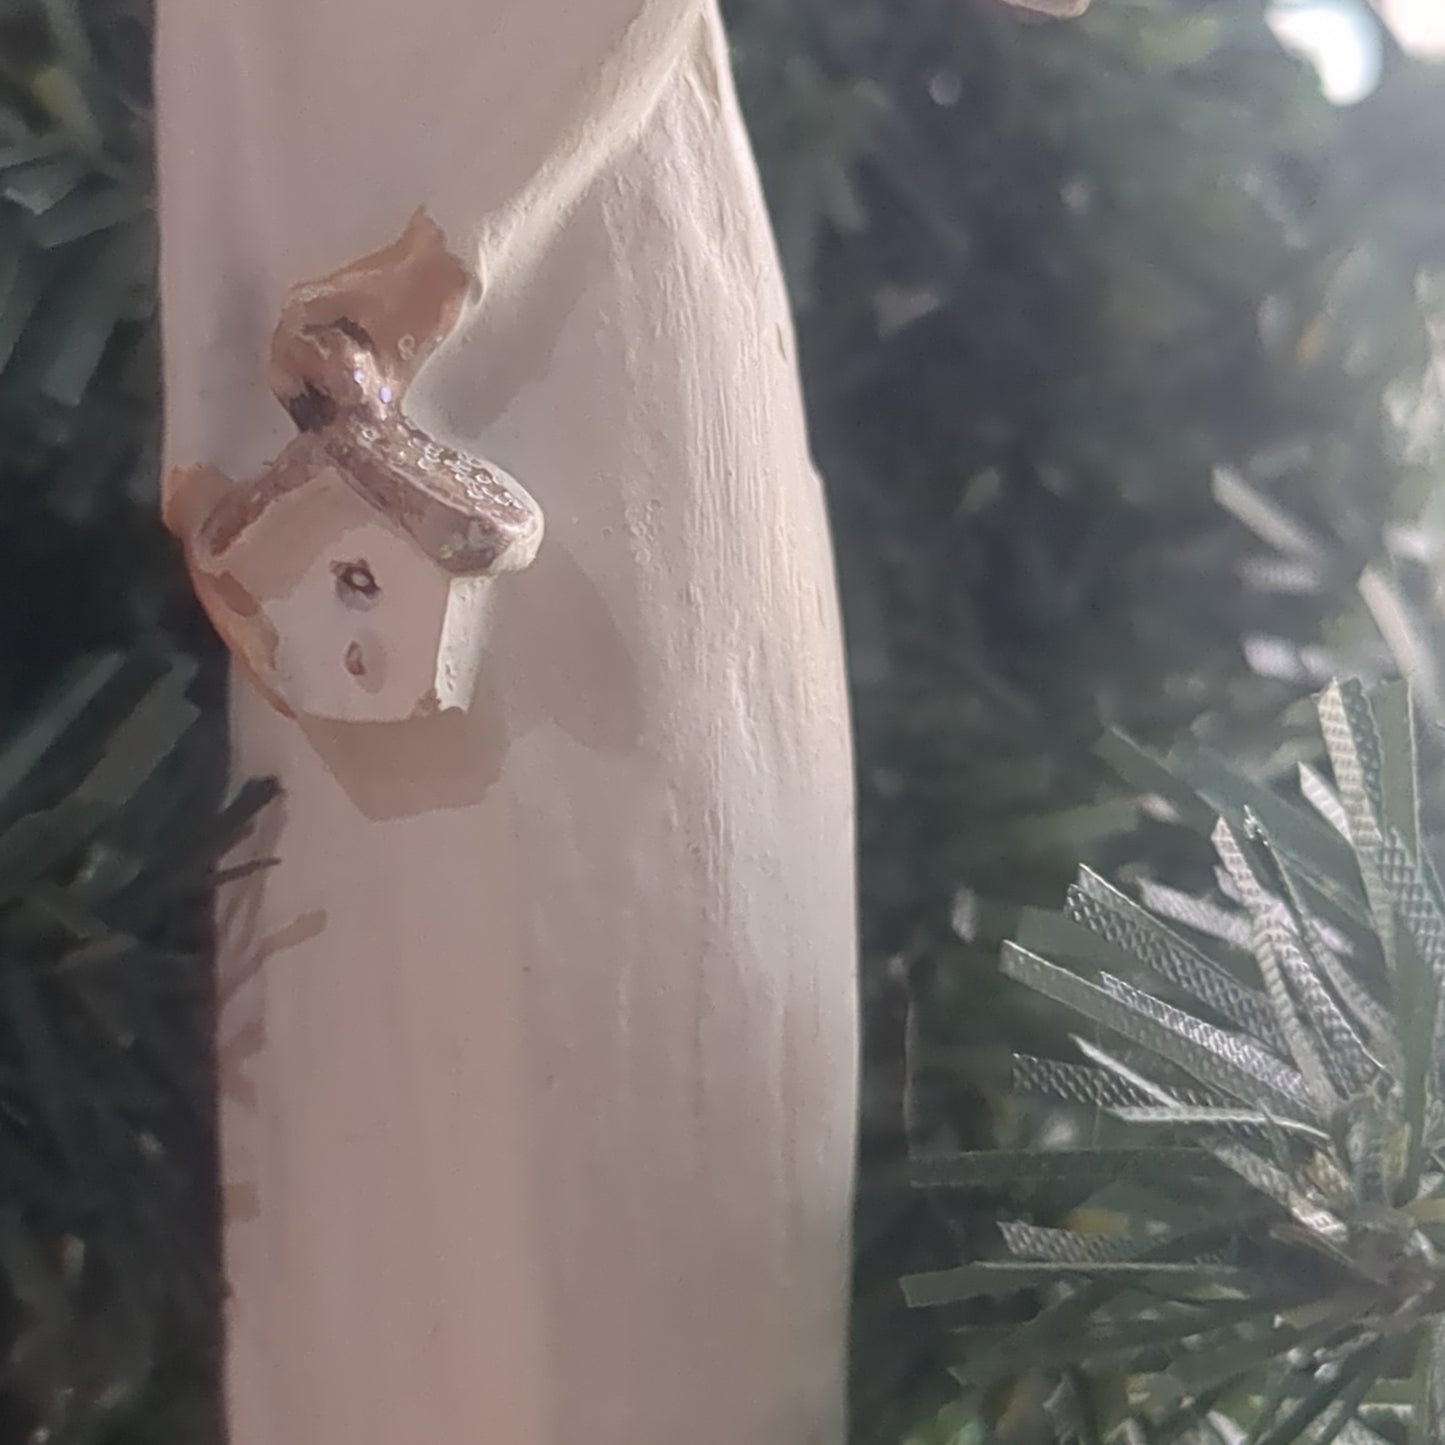 Angel holding a birdhouse ornament